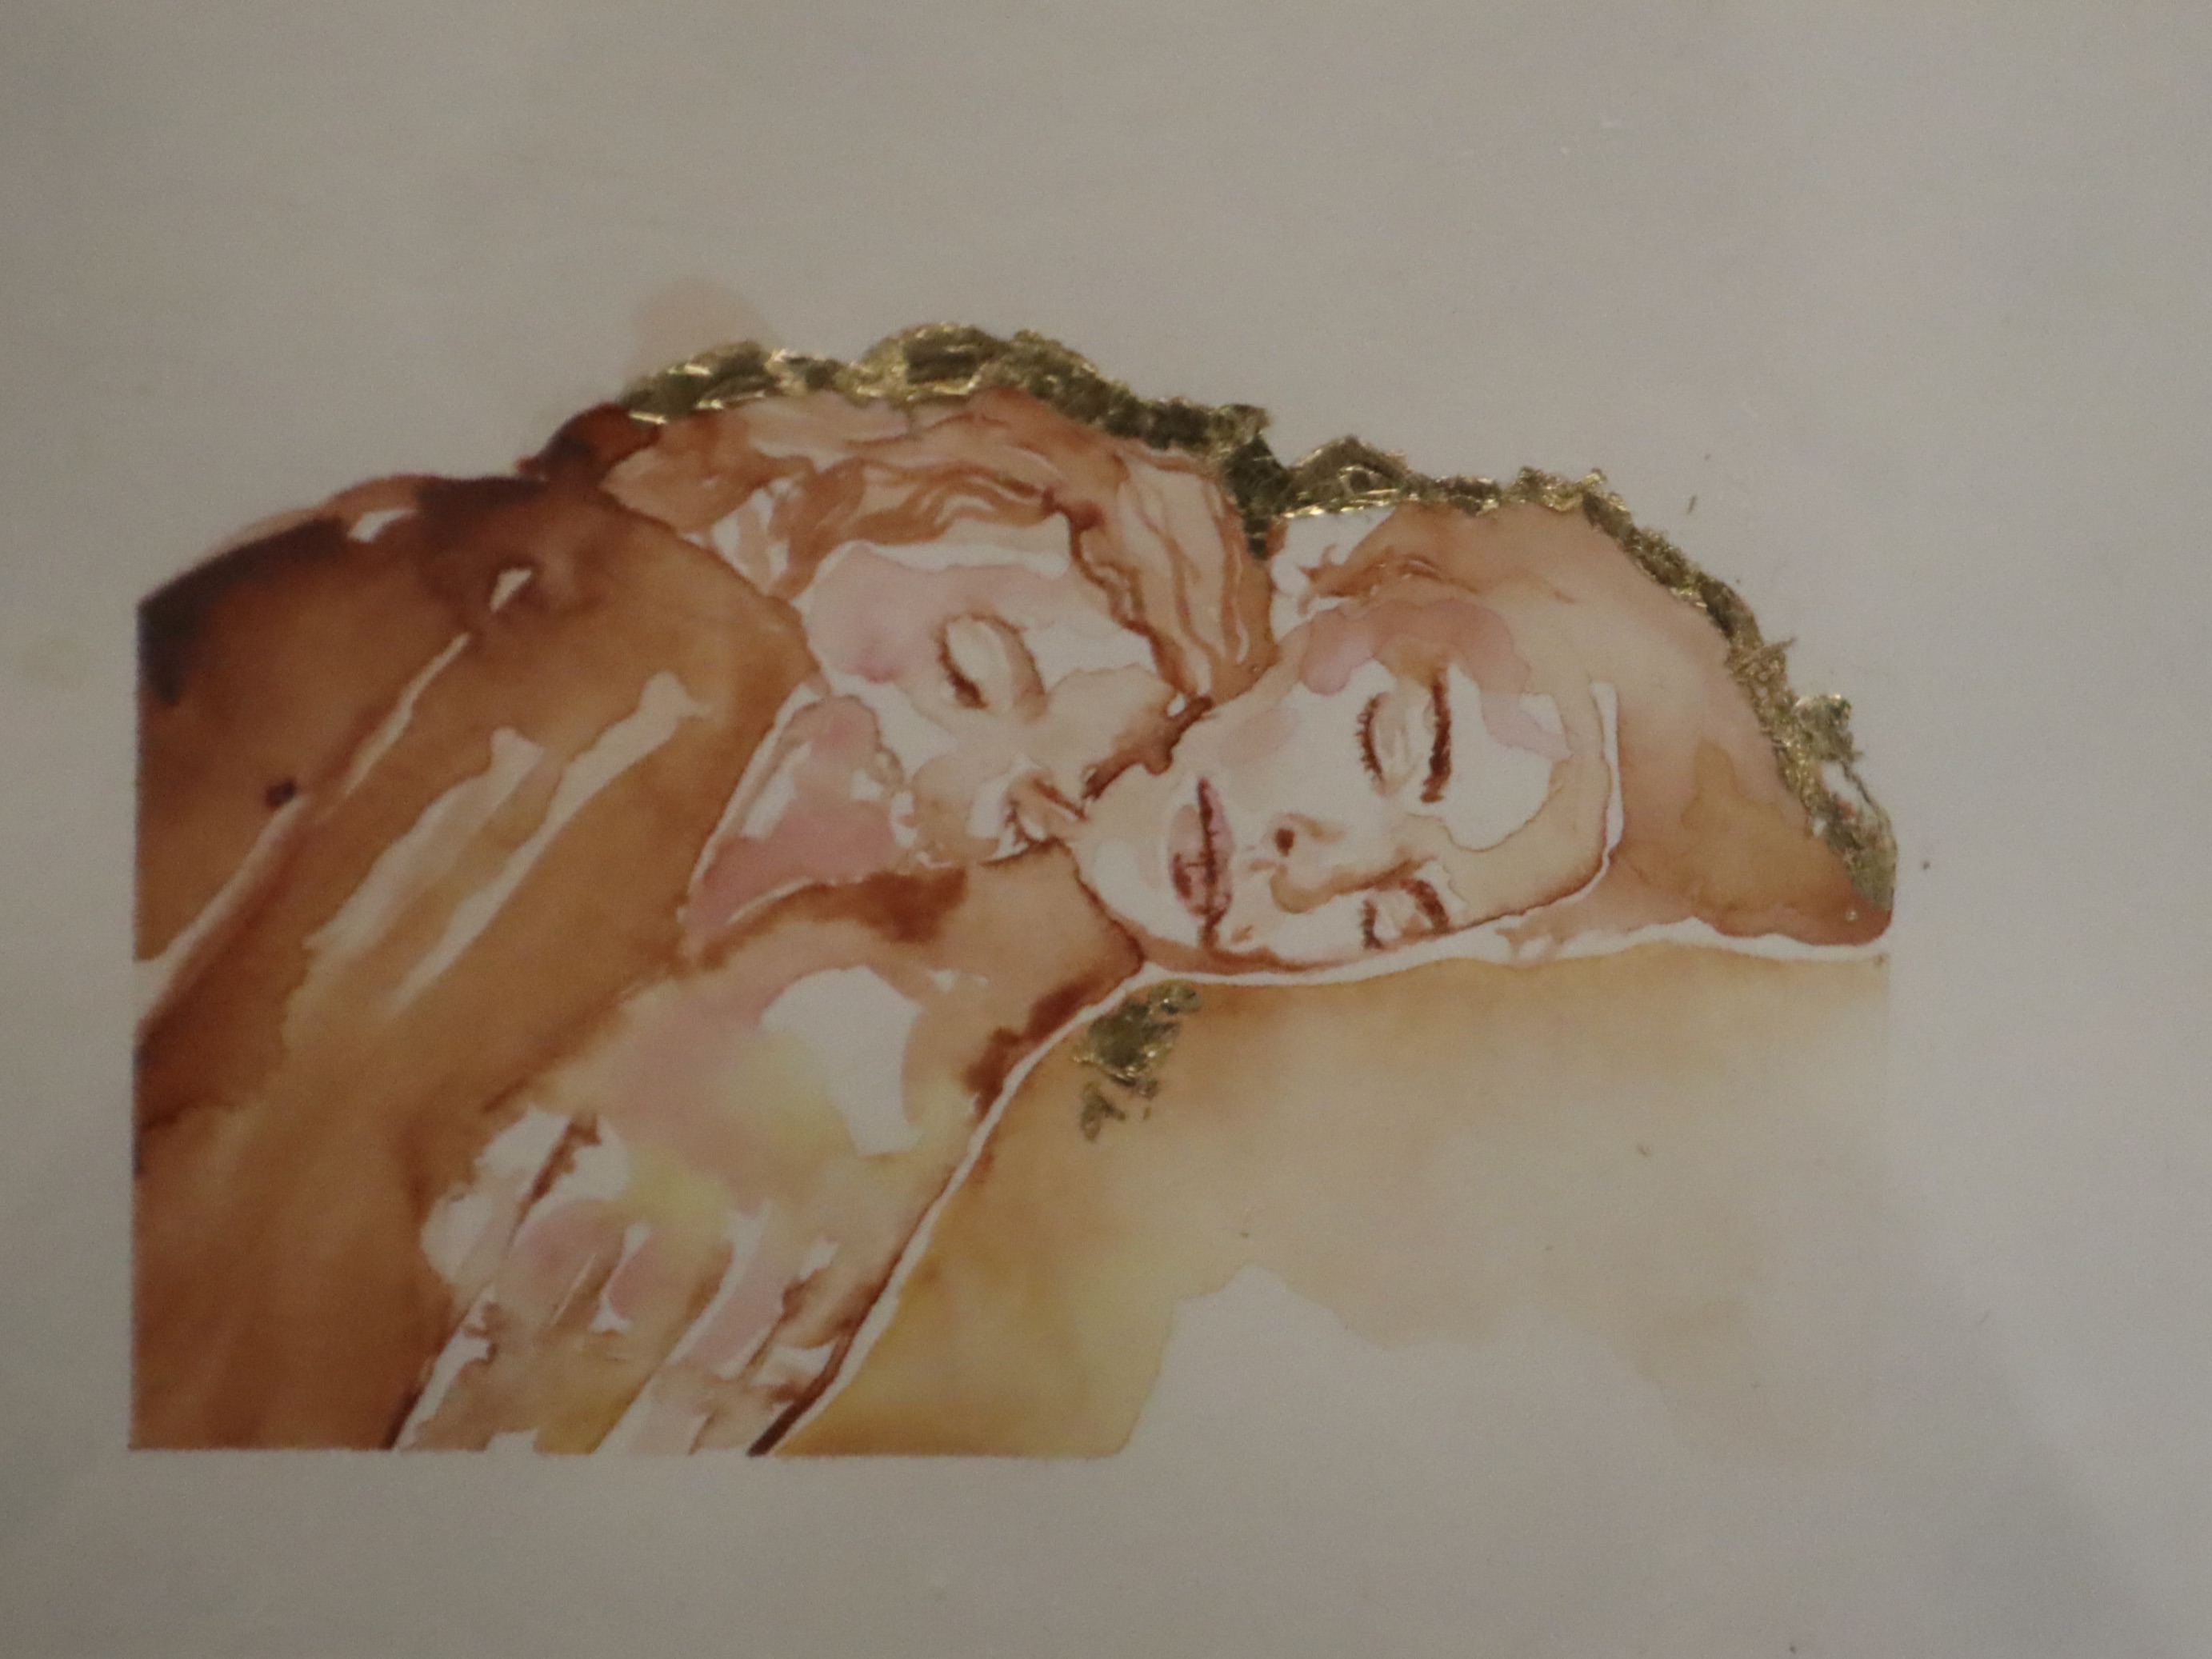 A watercolor of a couple sleeping